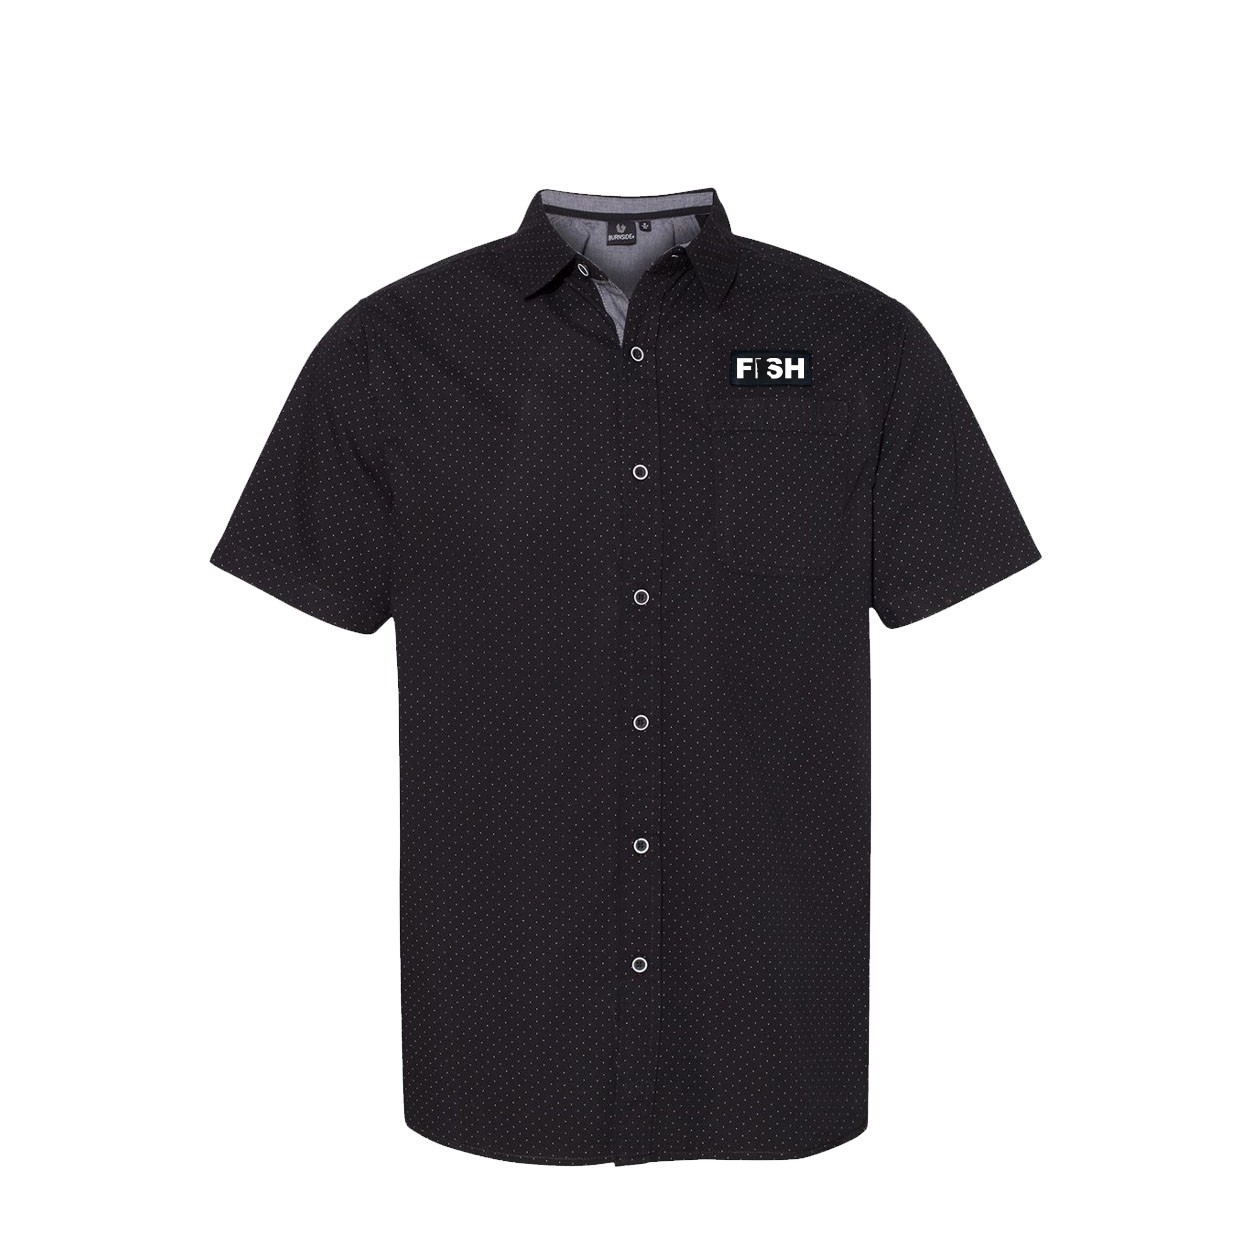 Fish Minnesota Classic Poplin Short Sleeve Woven Shirt Black/White Dot (White Logo)